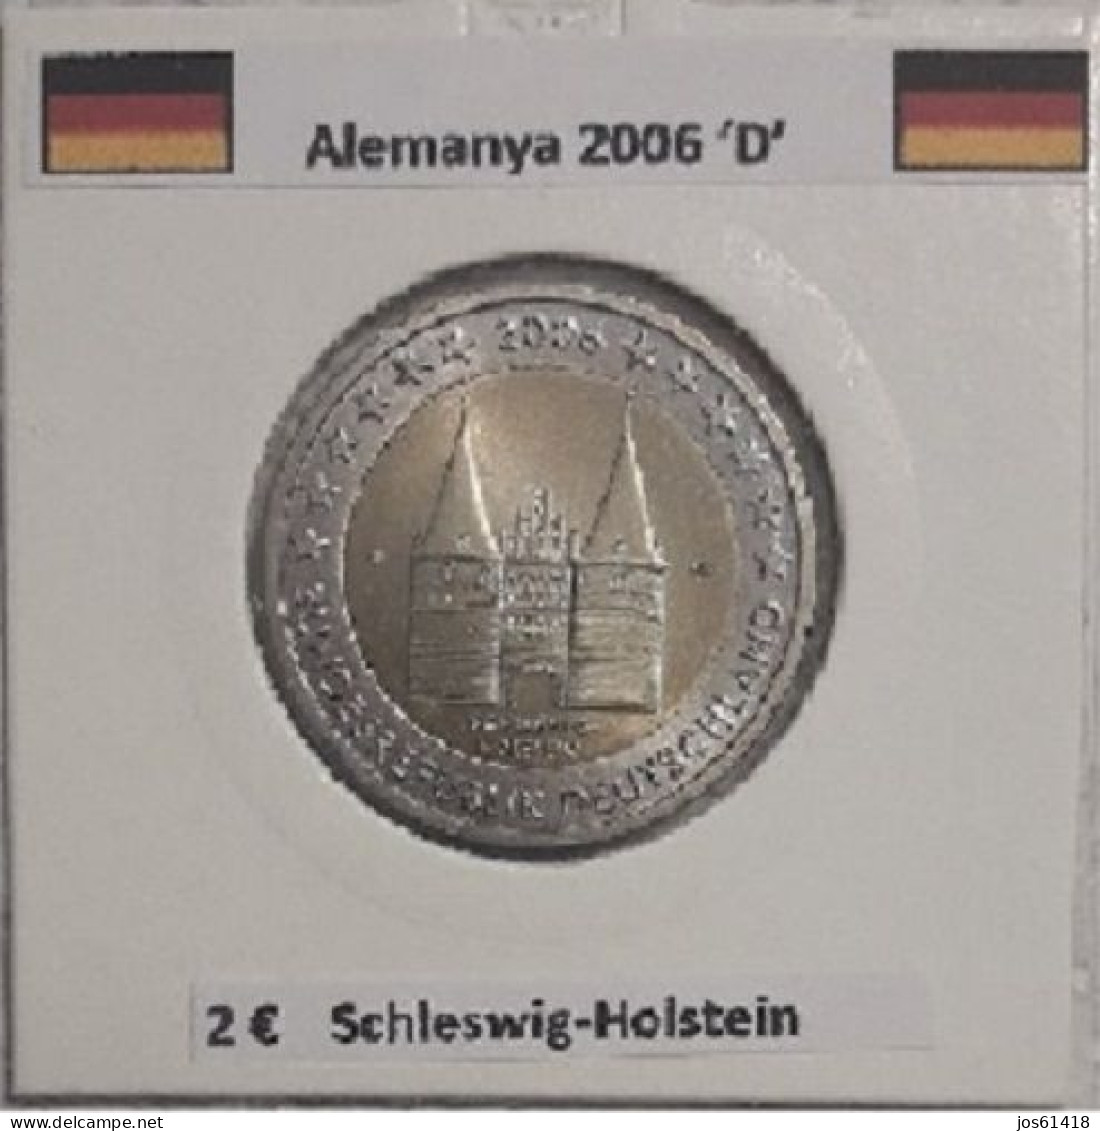 2 Euros Alemania / Germany 2006  Schleswig-Holstein  D Sin Circular - Germania